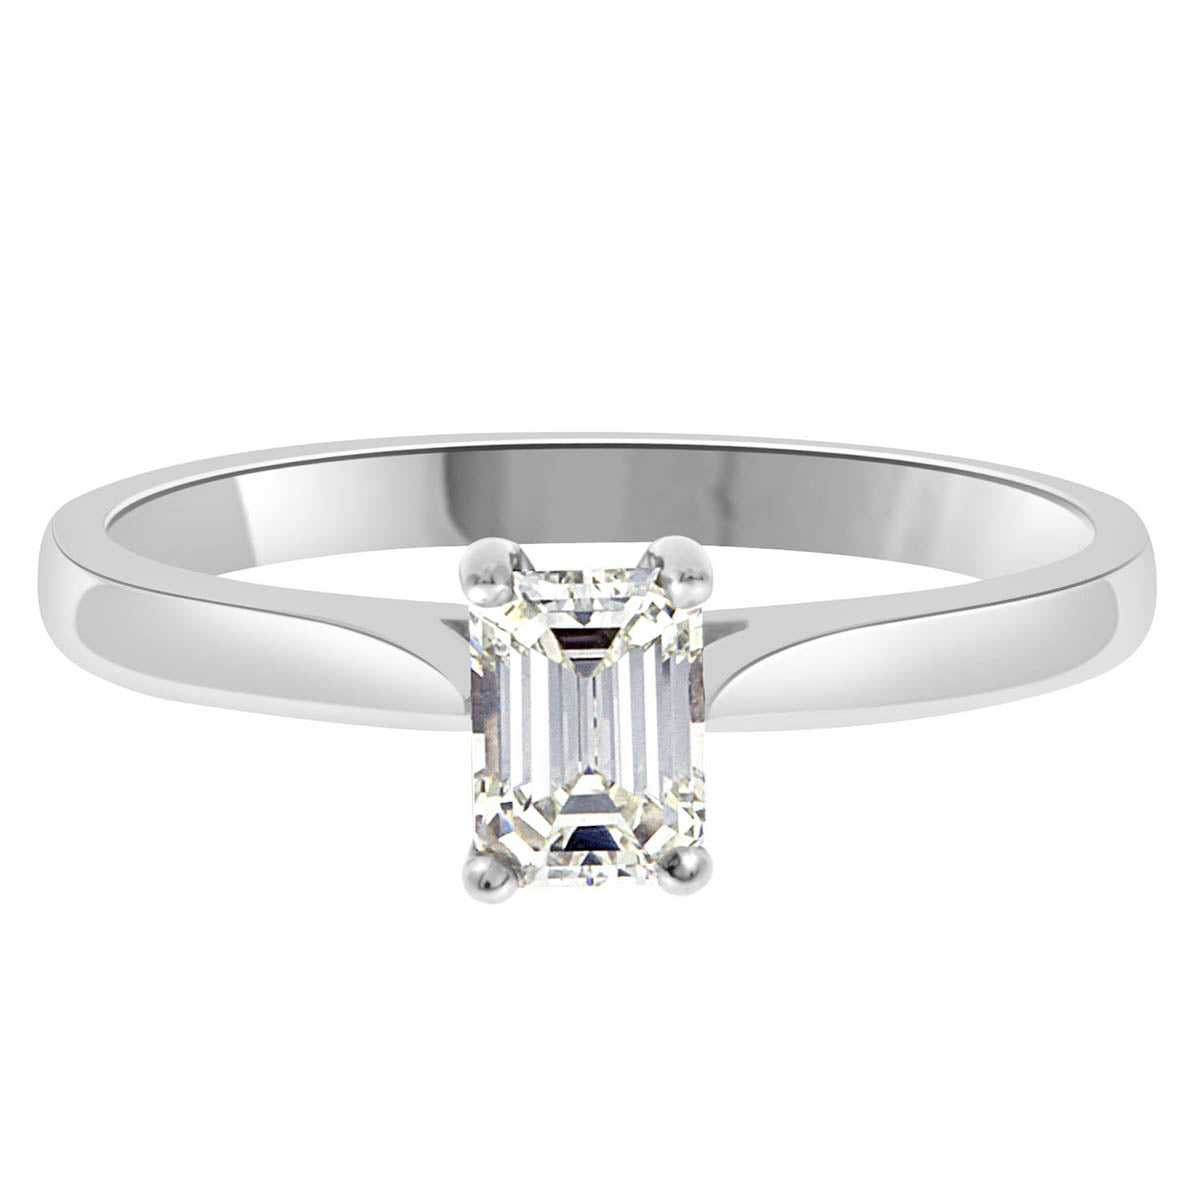 Emerald Cut Ring Solitaire Engagement Ring in platinum